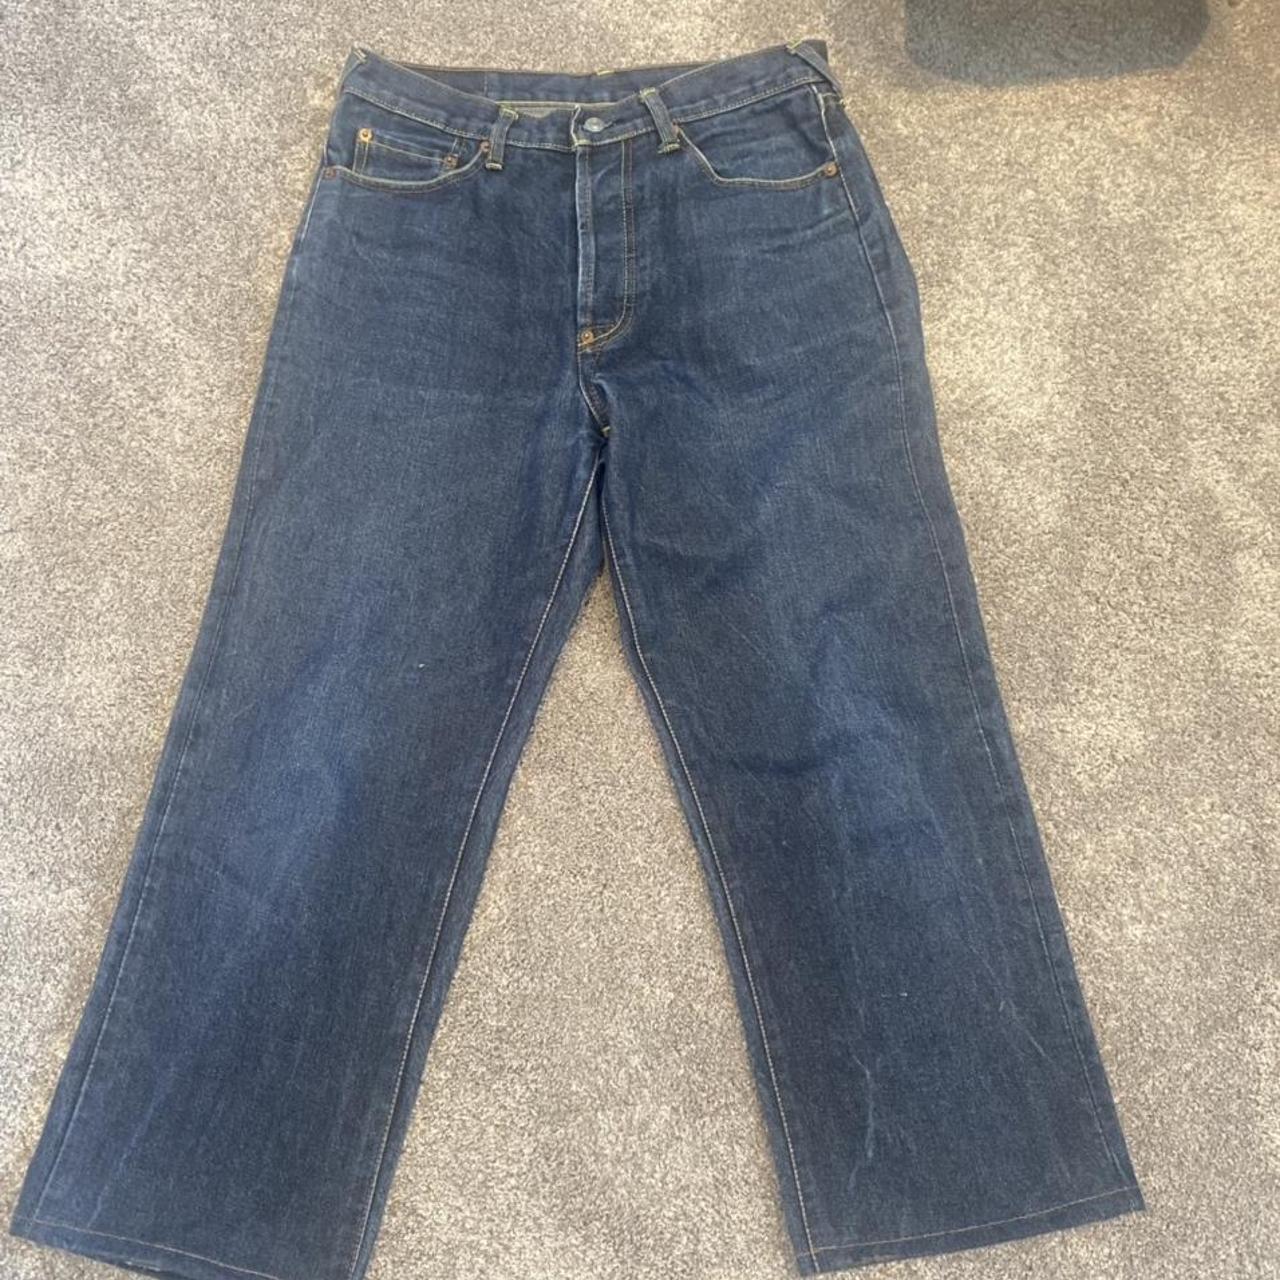 Blue embroidered evisu jeans Waist 28/30 Length is... - Depop